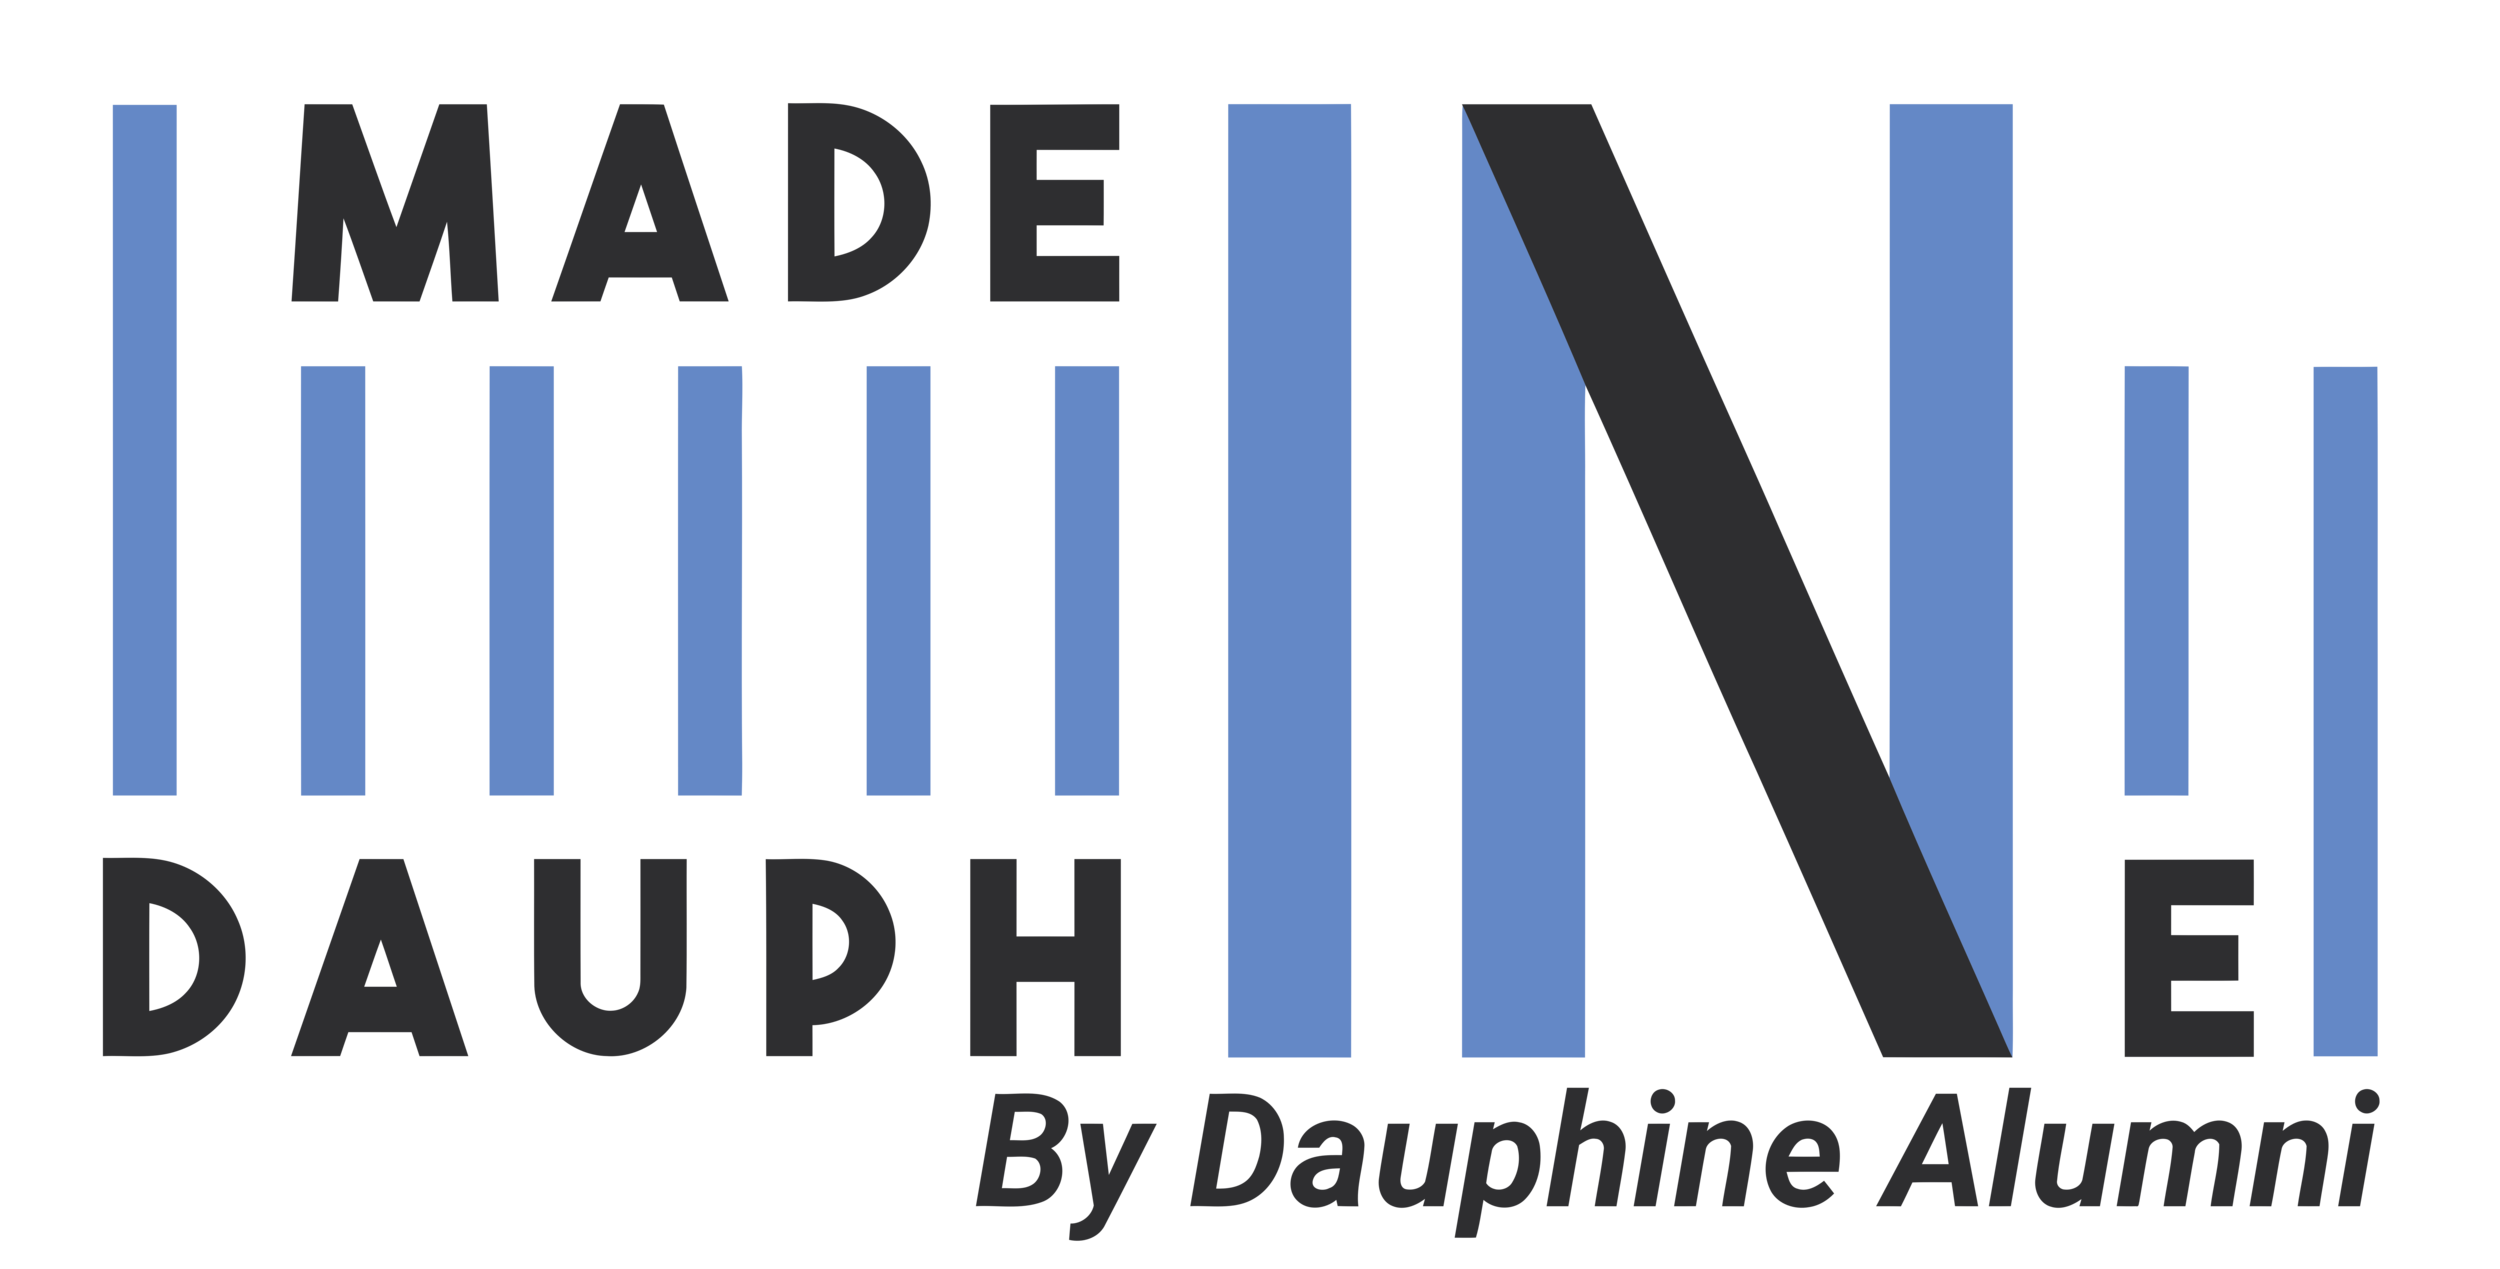 Dauphine Alumni.png